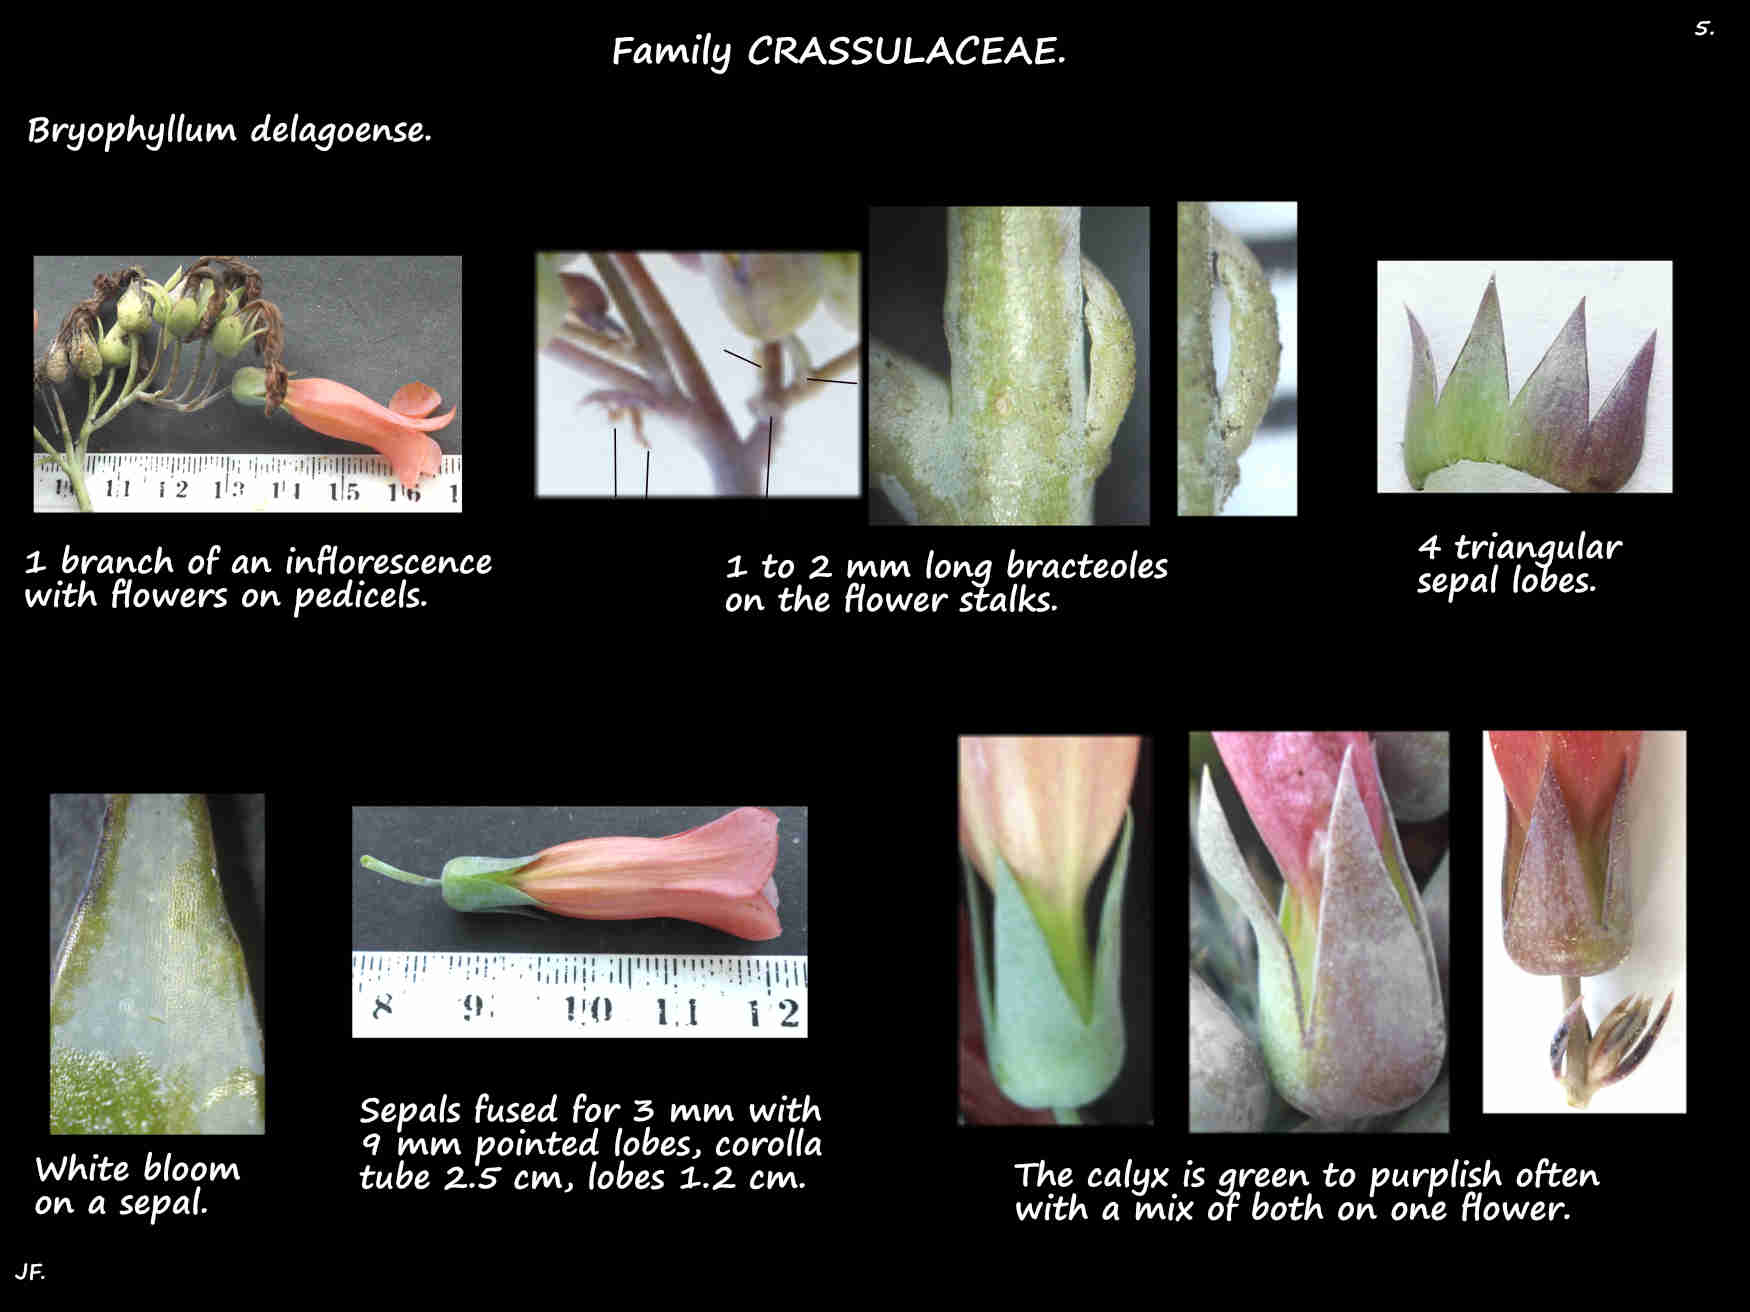 5 Bryophyllum delagoense sepals